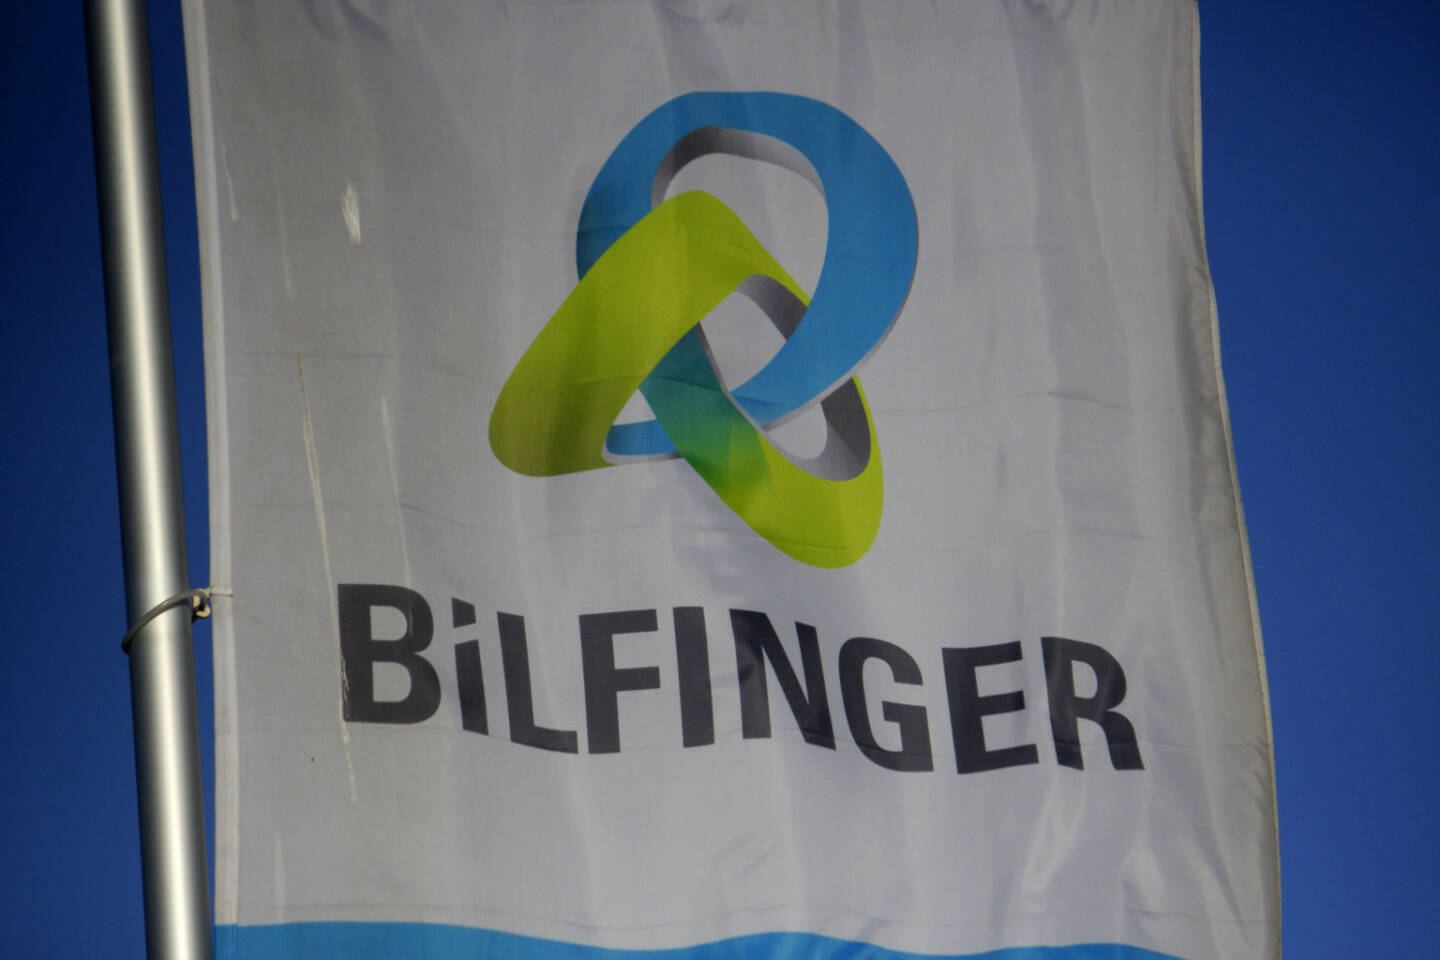 Bilfinger Logo, Flagge <a href=http://www.shutterstock.com/gallery-320989p1.html?cr=00&pl=edit-00>360b</a> / <a href=http://www.shutterstock.com/editorial?cr=00&pl=edit-00>Shutterstock.com</a>